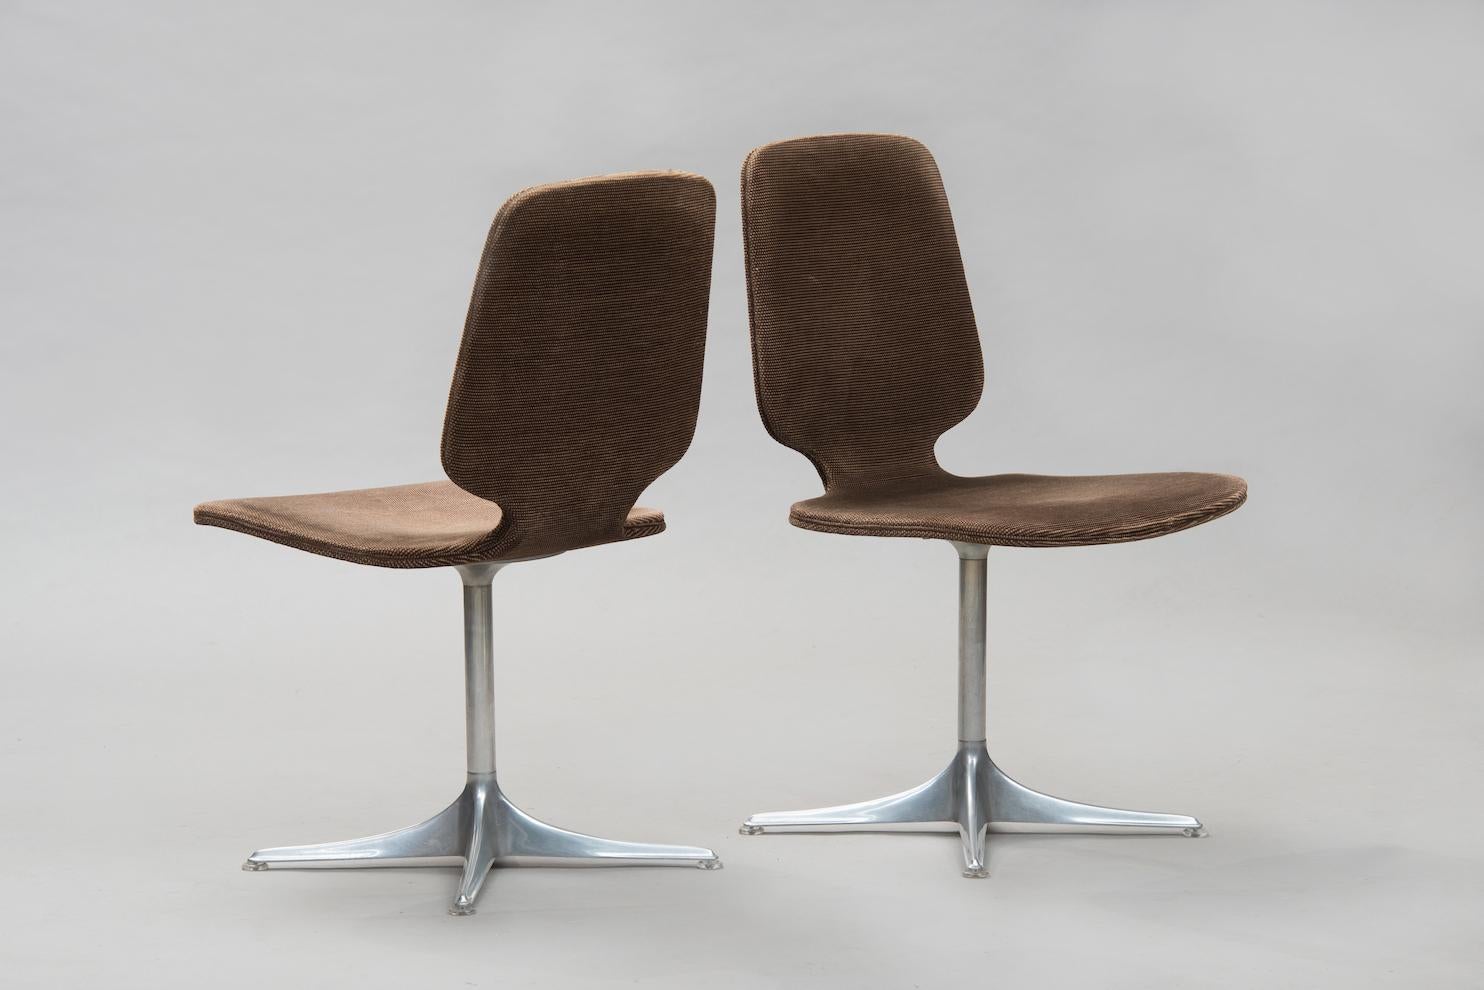 German Horst Brüning 'Sedia' Model Dining Chairs for COR